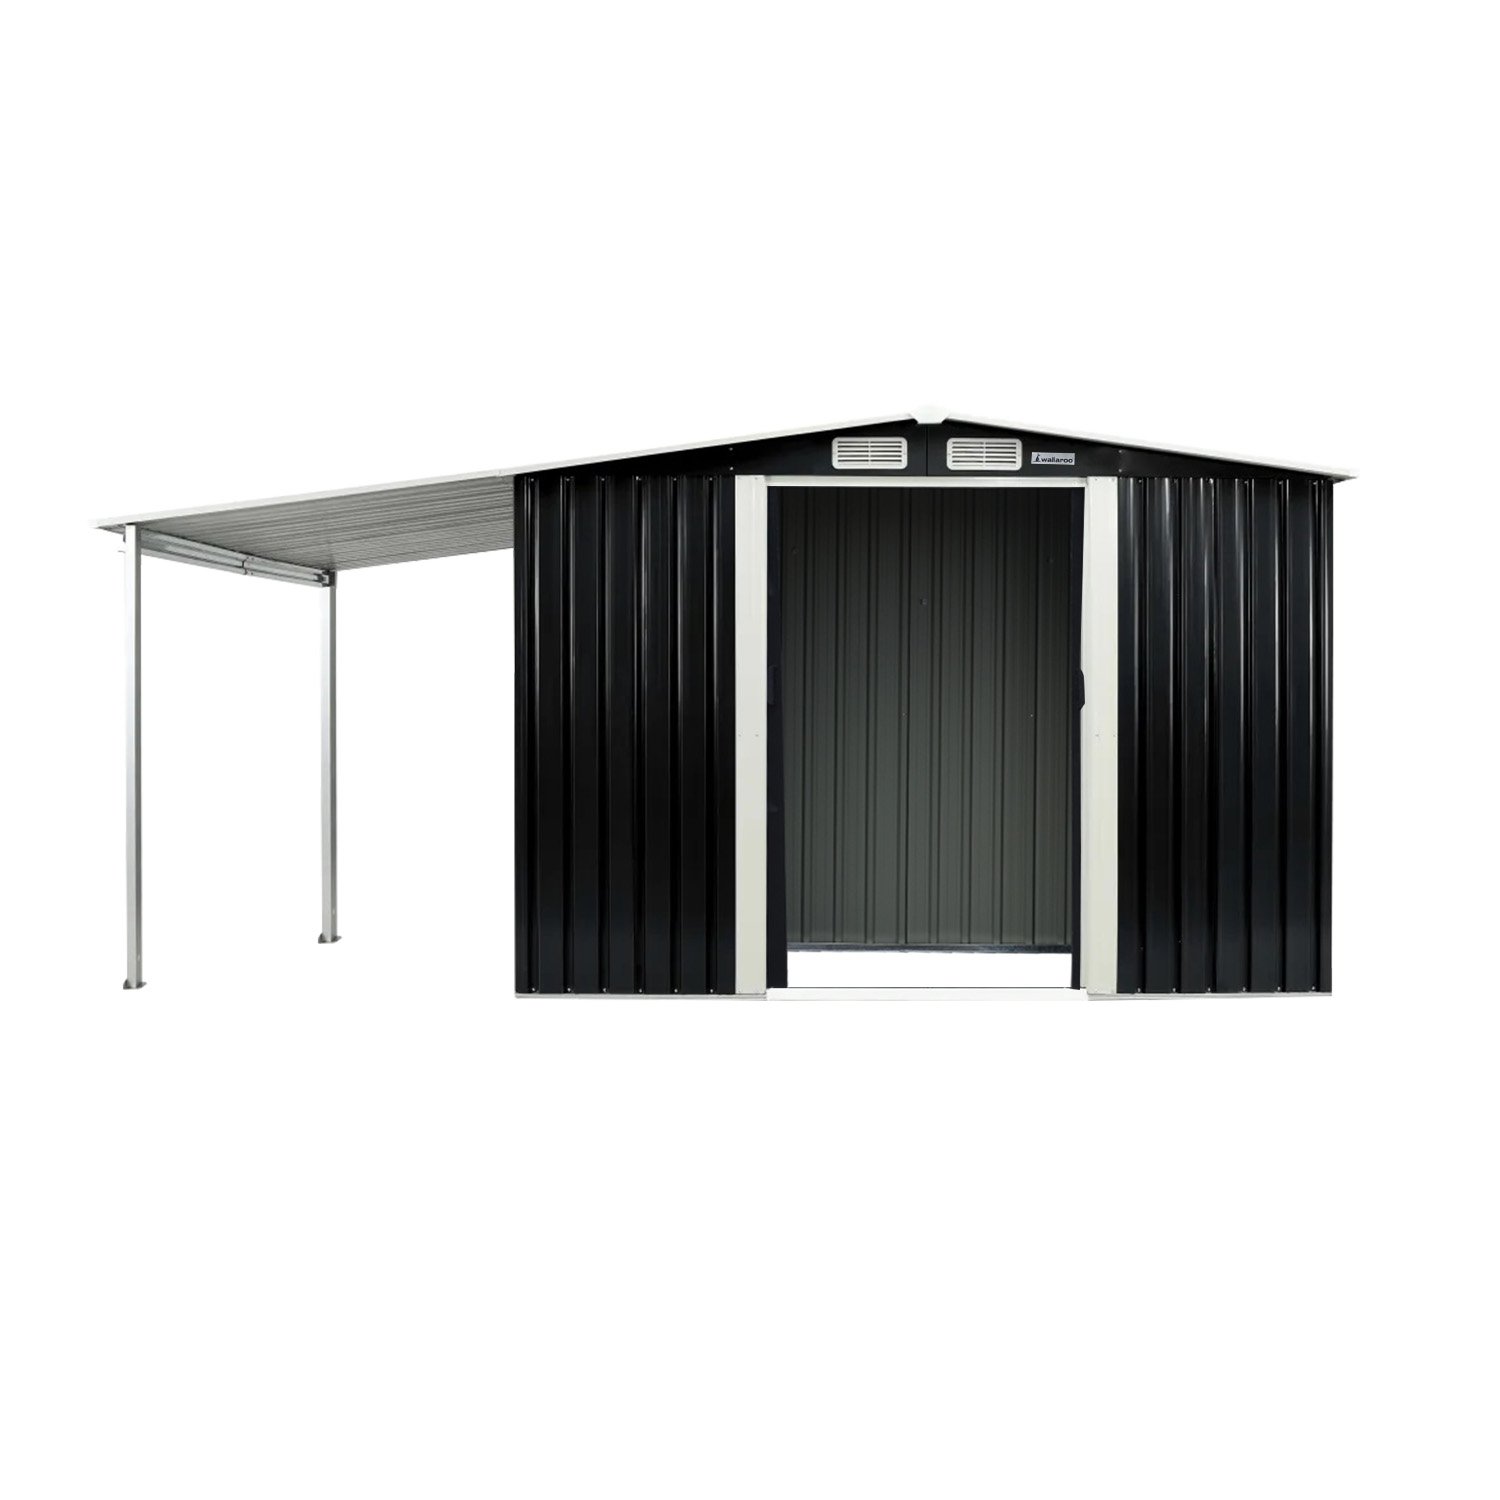 Wallaroo 6x8ft Zinc Steel Garden Shed with Open Storage - Black 1